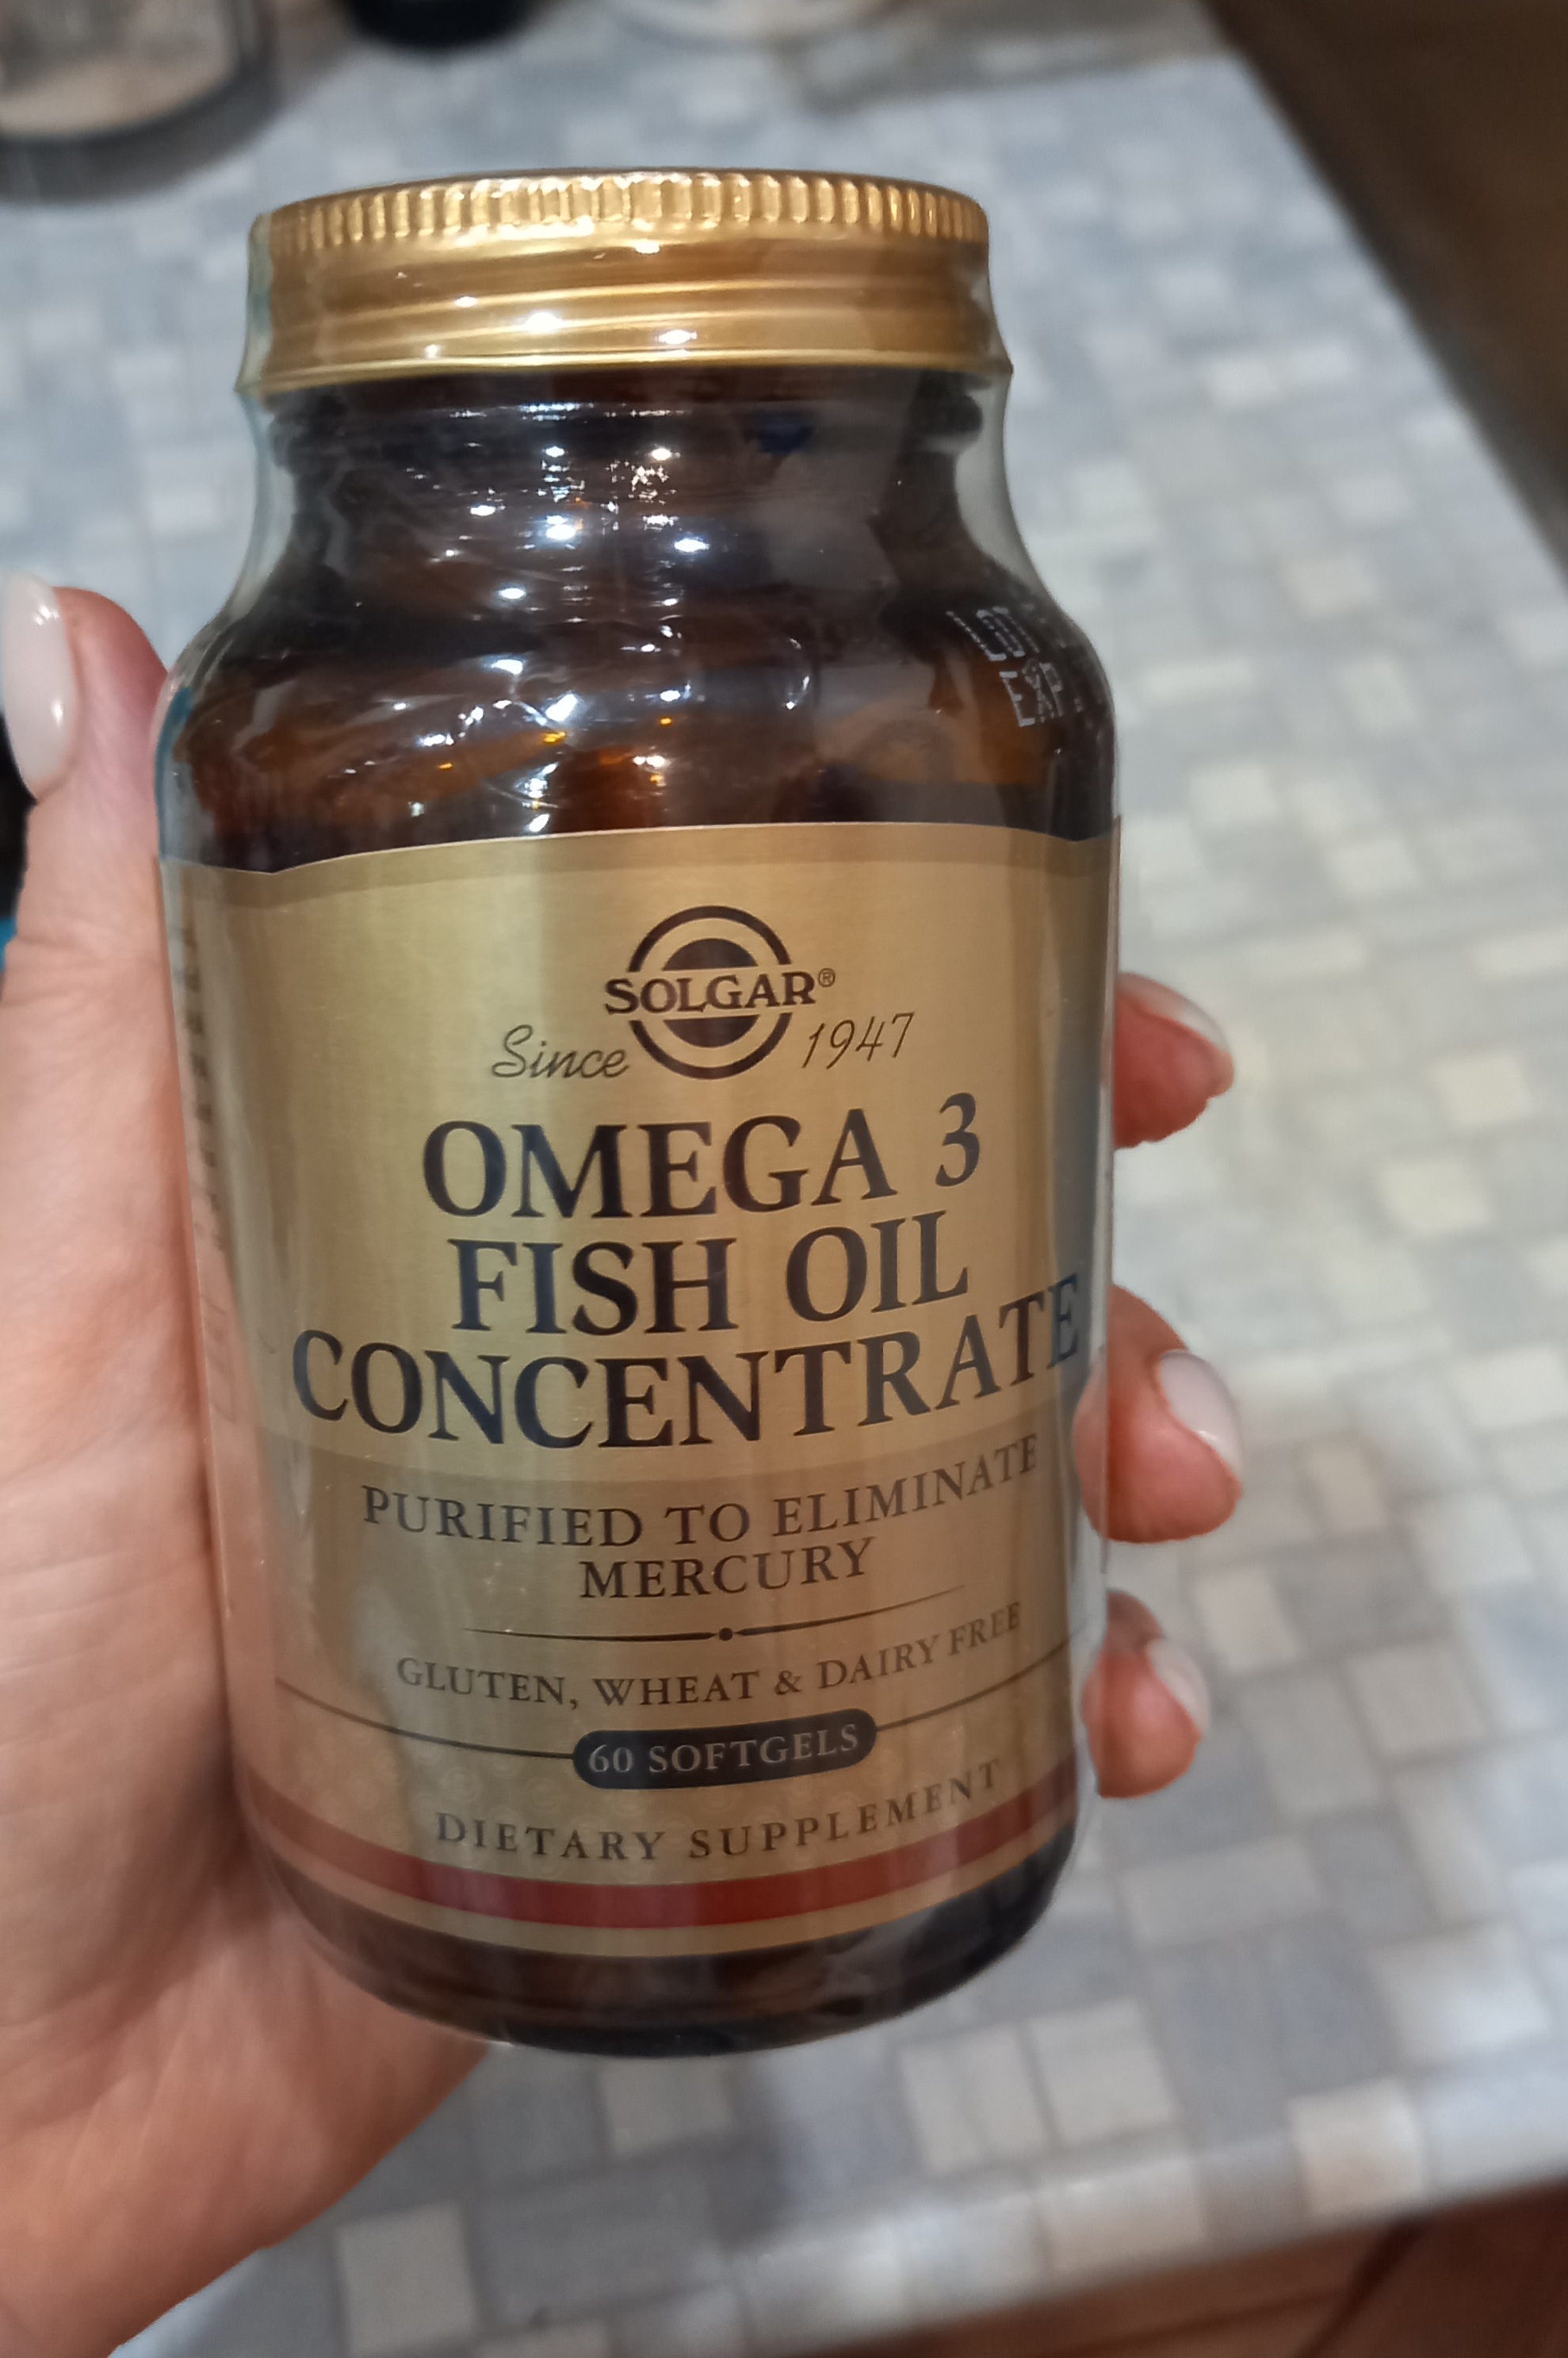 Omega 3 fish oil concentrate капсулы. Солгар кожа ногти волосы 120 шт. Цинк пиколинат Солгар 22 мг. Солгар пиколинат цинка детский. Пиколинат цинка Солгар фото.